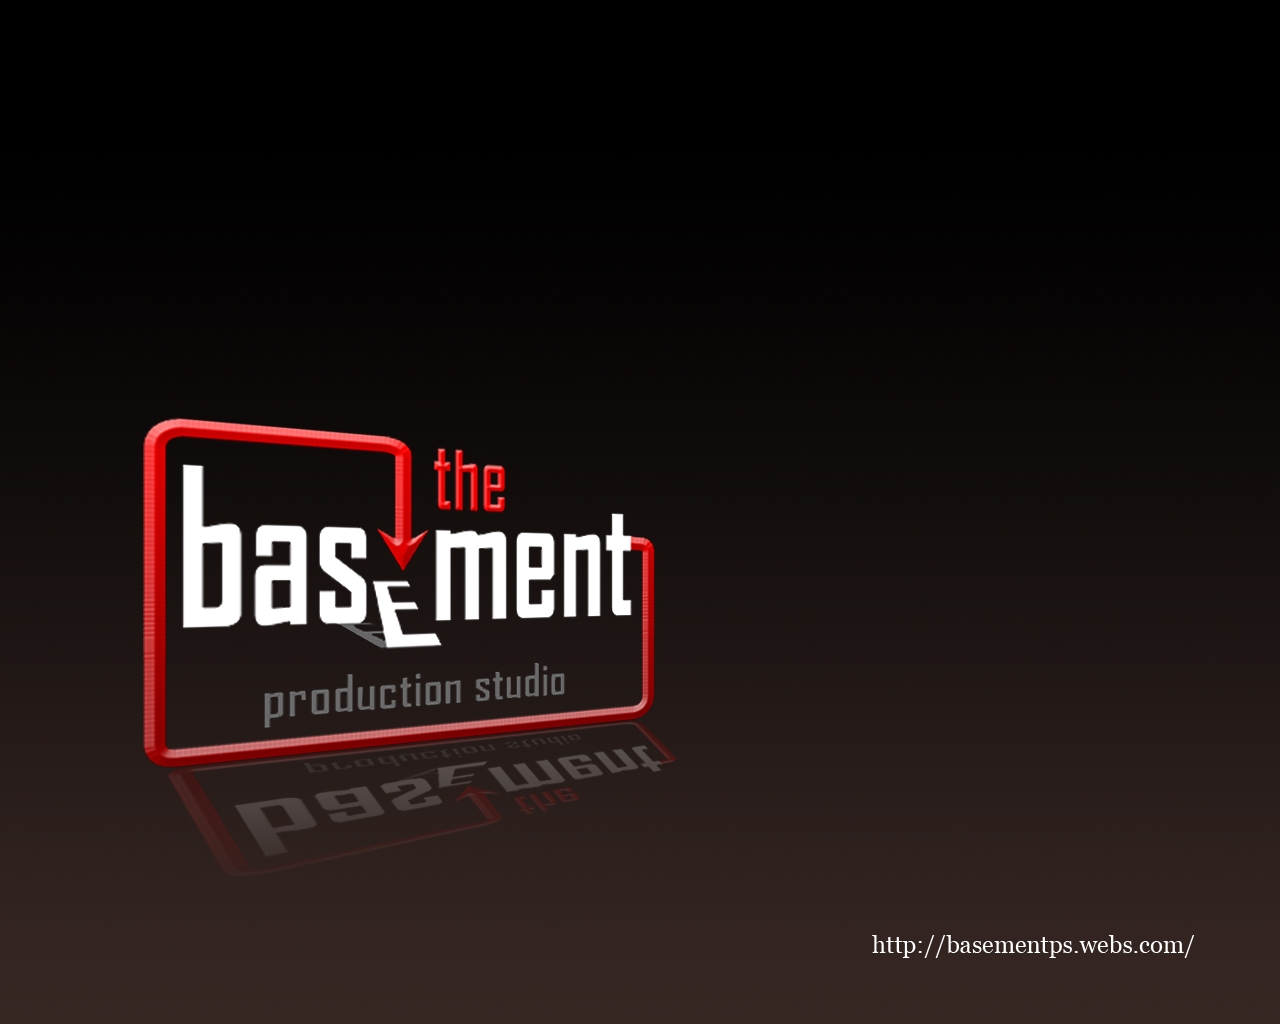 The Basement Production Studio